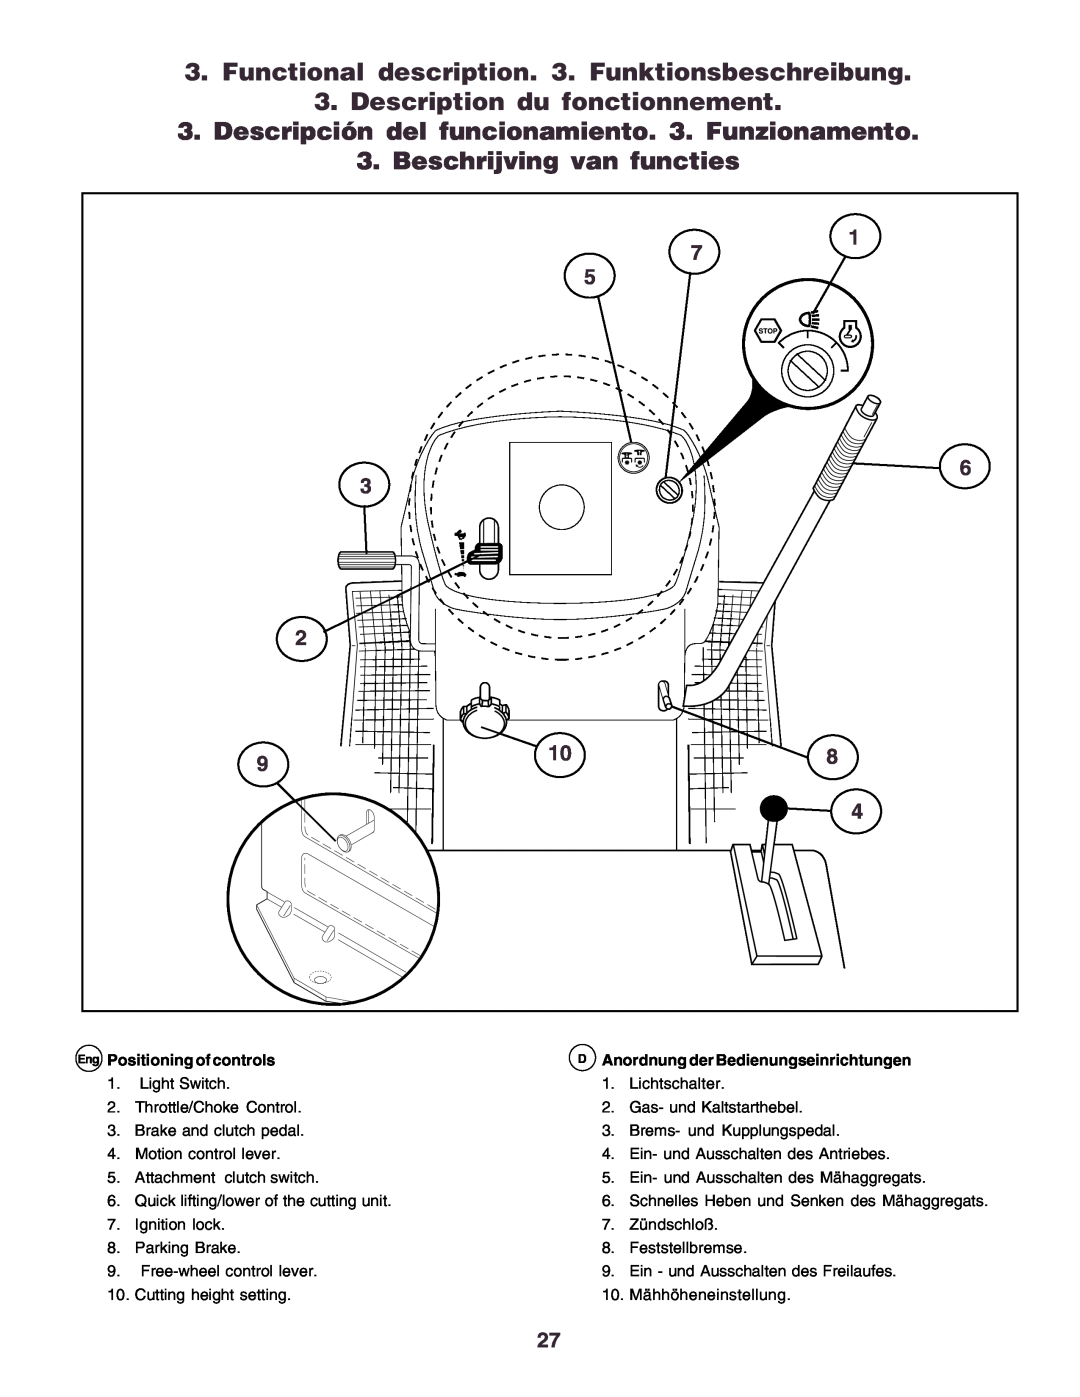 Husqvarna YTH170 instruction manual Description du fonctionnement, Beschrijving van functies, Eng Positioning of controls 